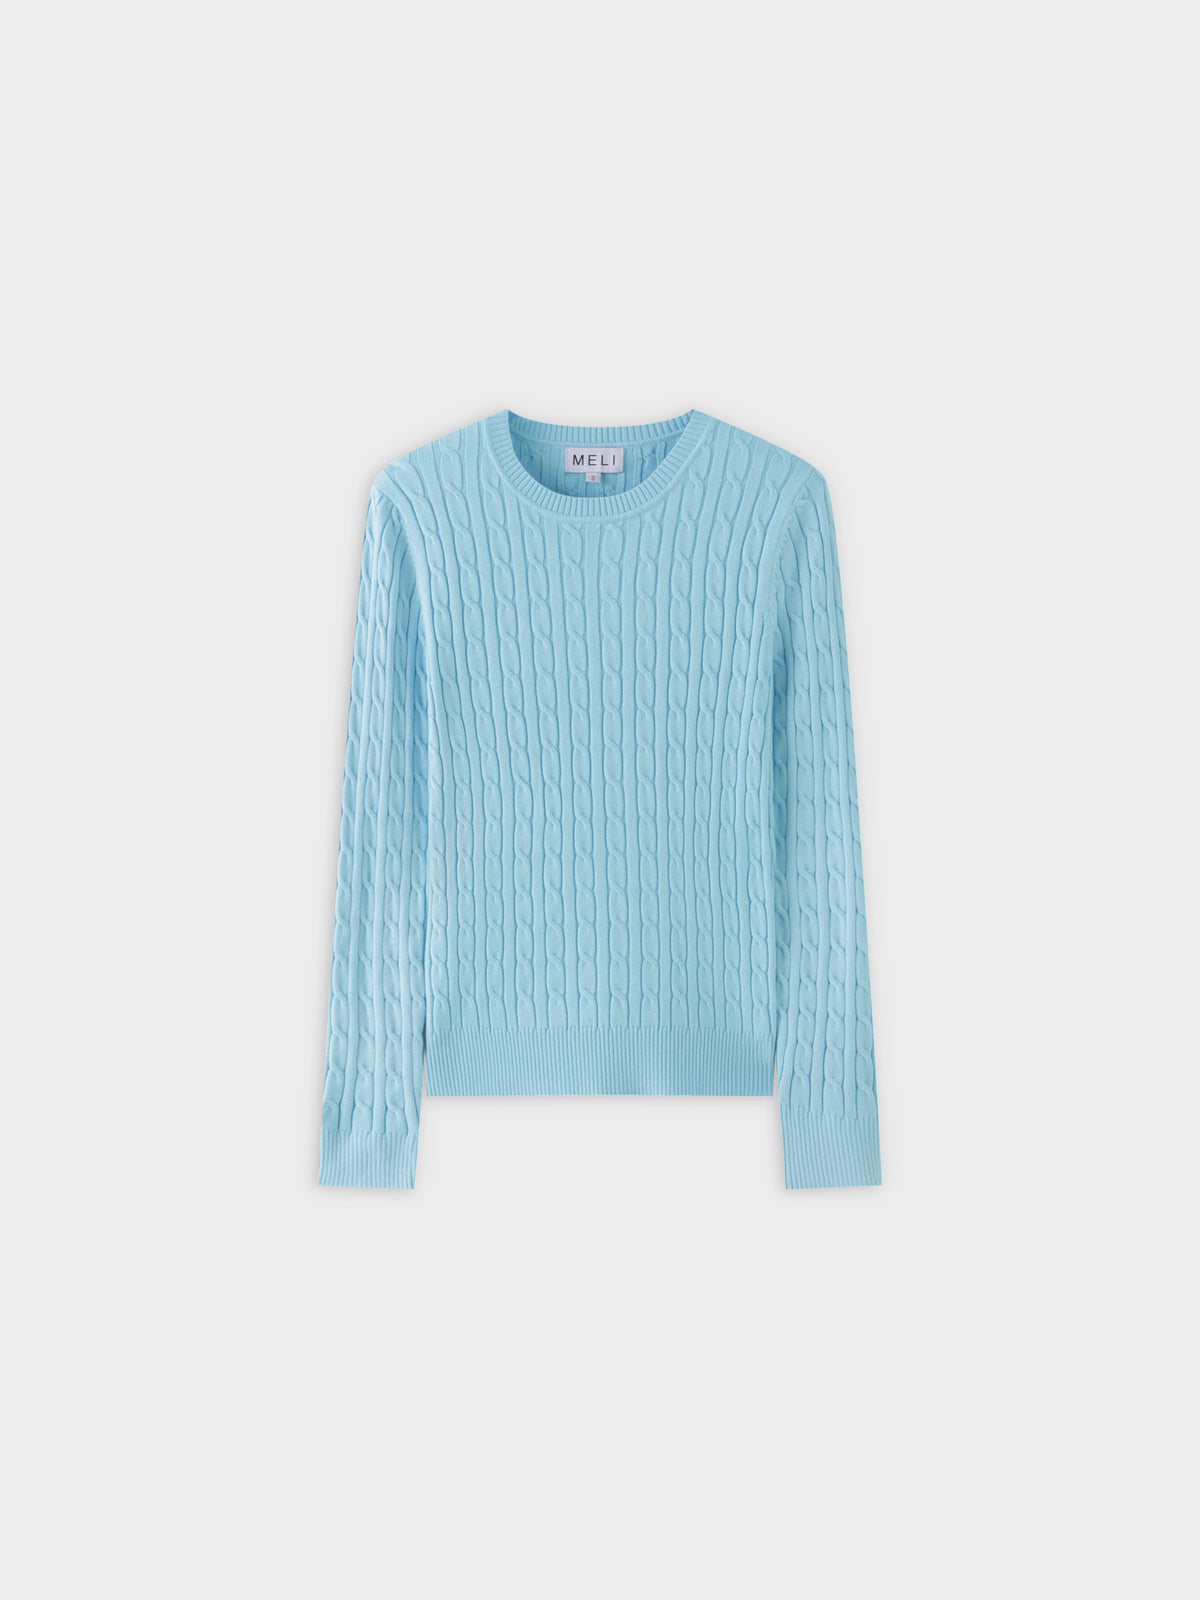 Knit Cable Sweater-Aqua Blue